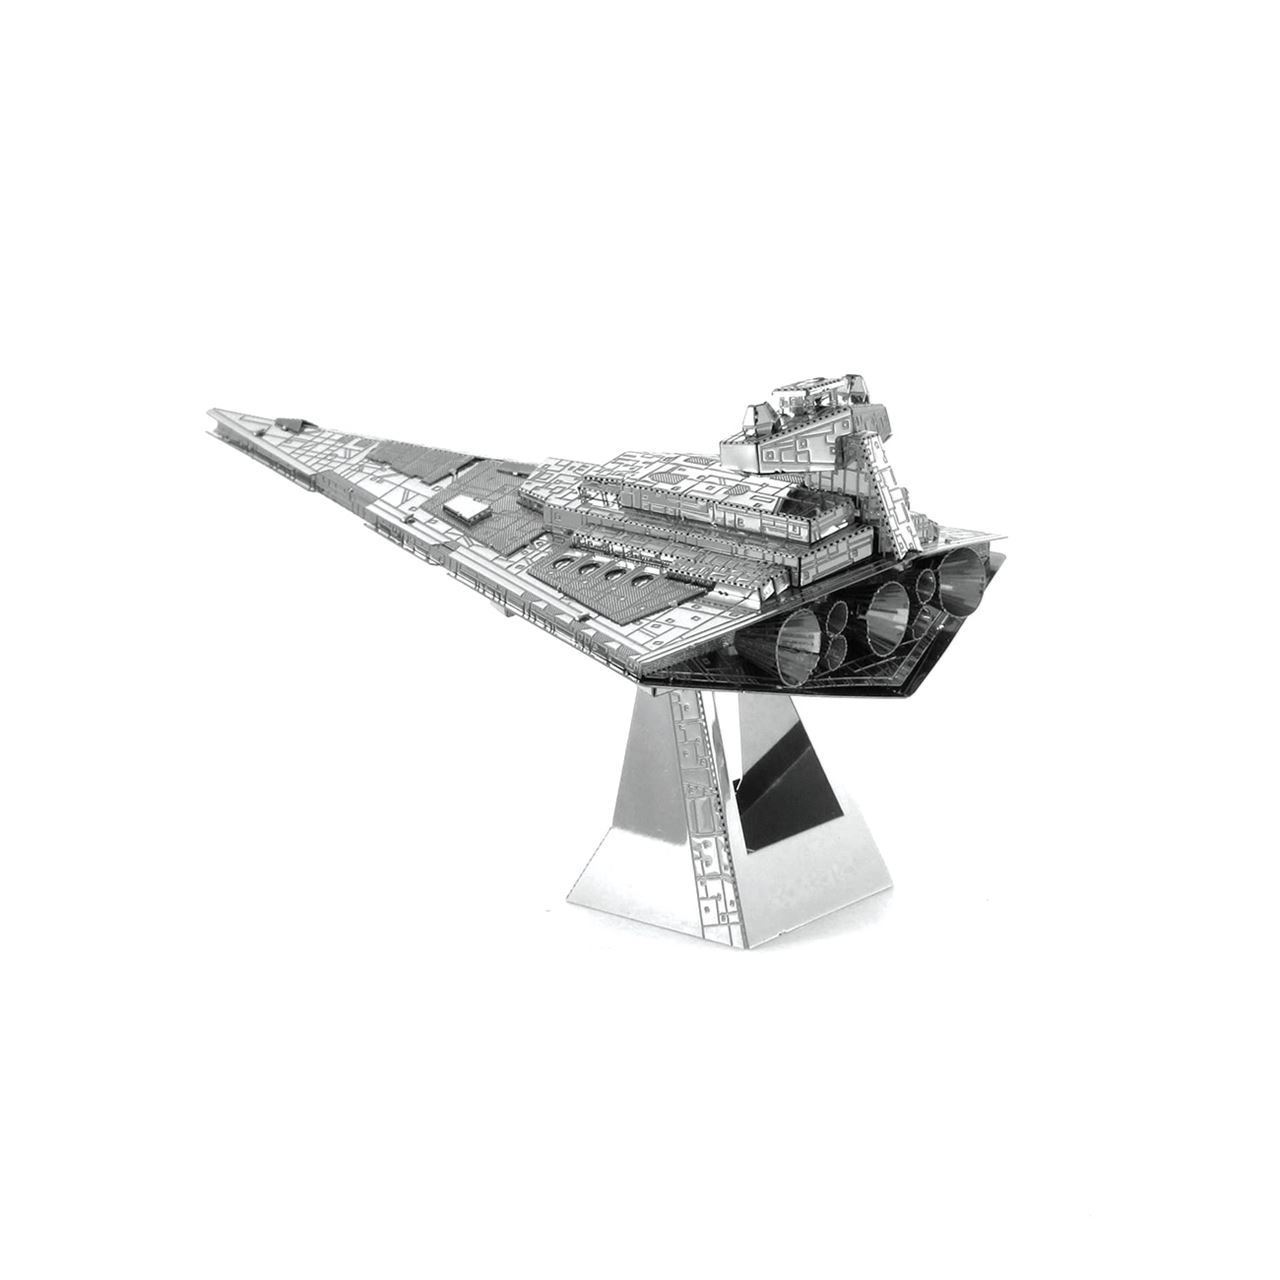 Metal Earth Modellino Star Wars Imperial Star Destroye 3D Model Kit FASCINATIONS 